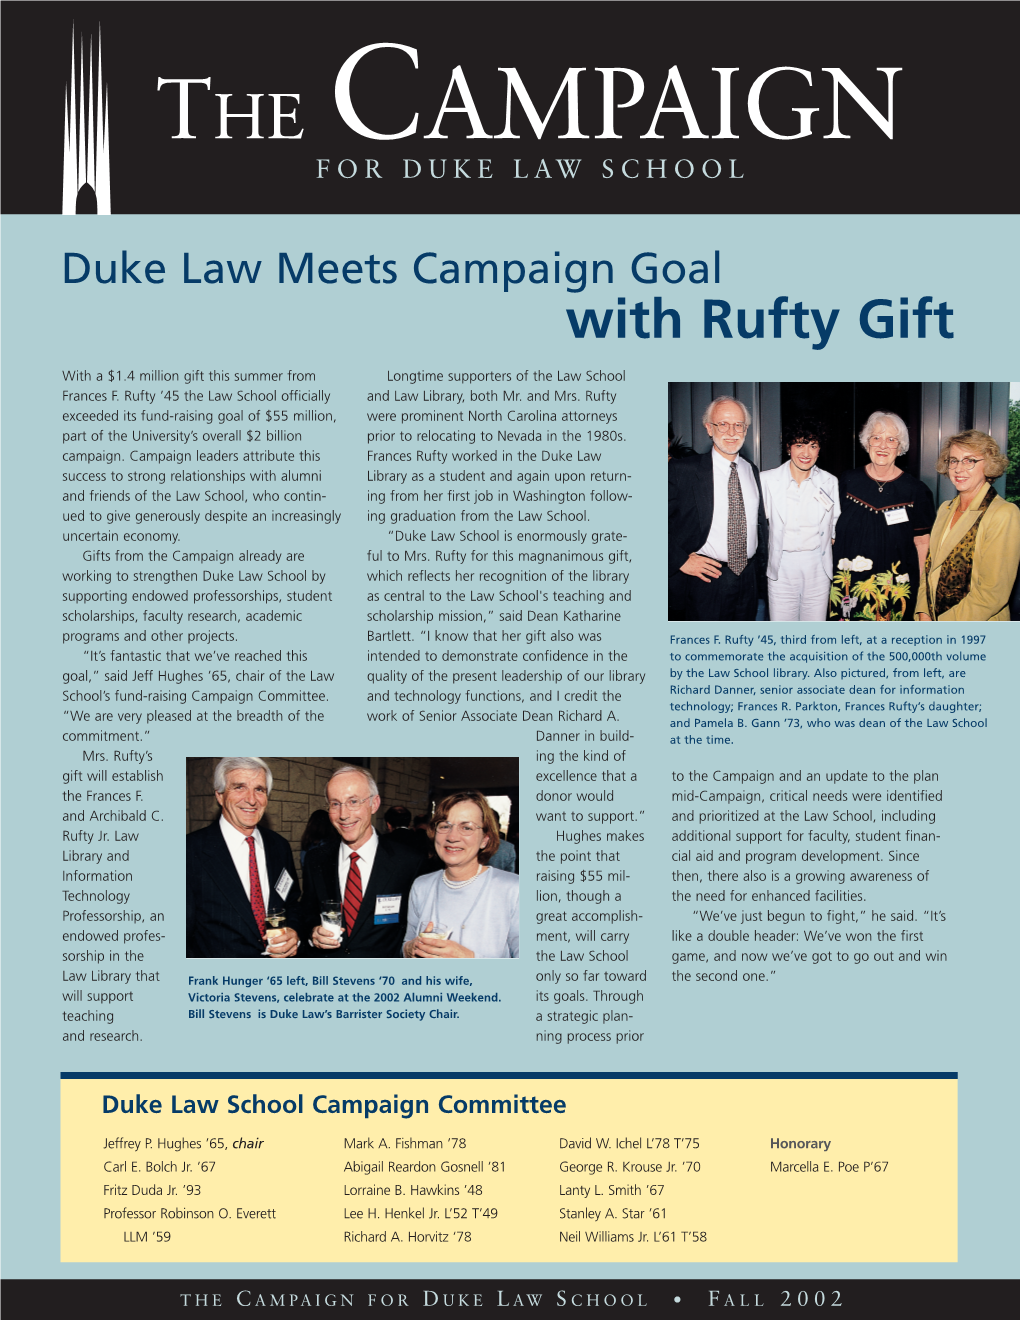 The Campaign for Duke Law School